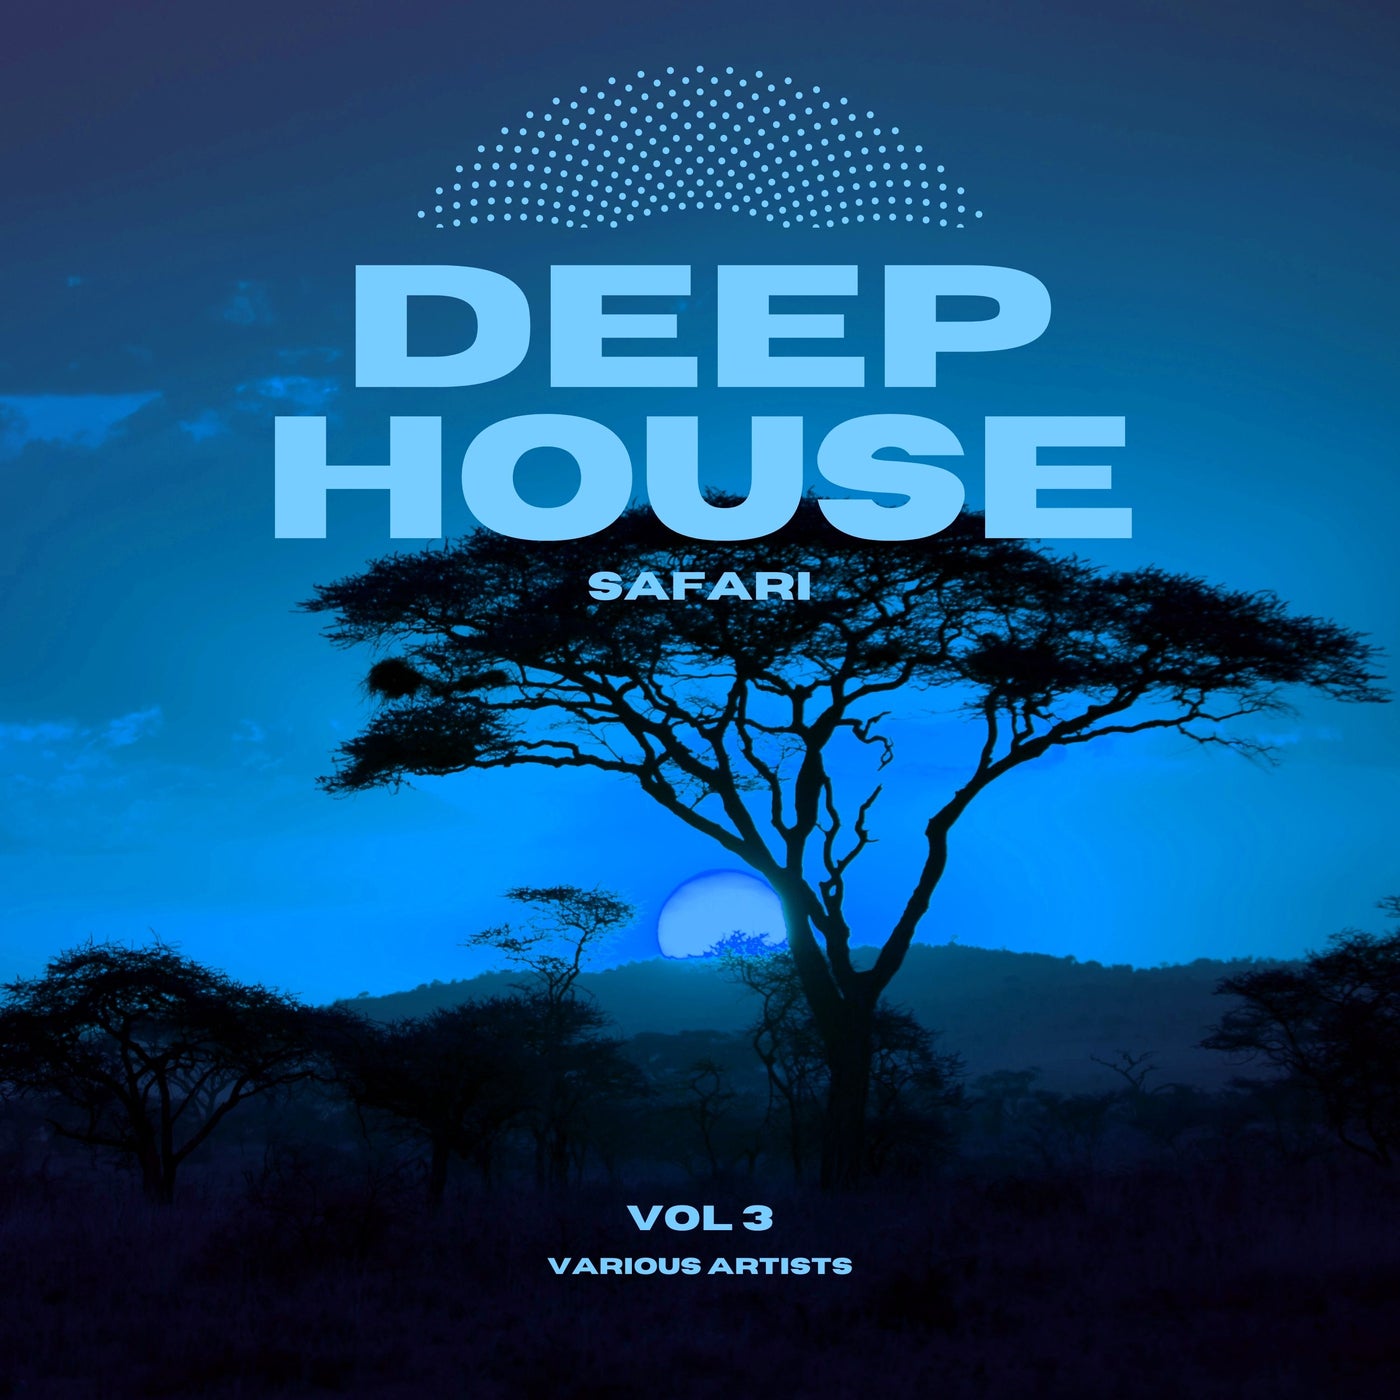 Deep-House Safari, Vol. 3